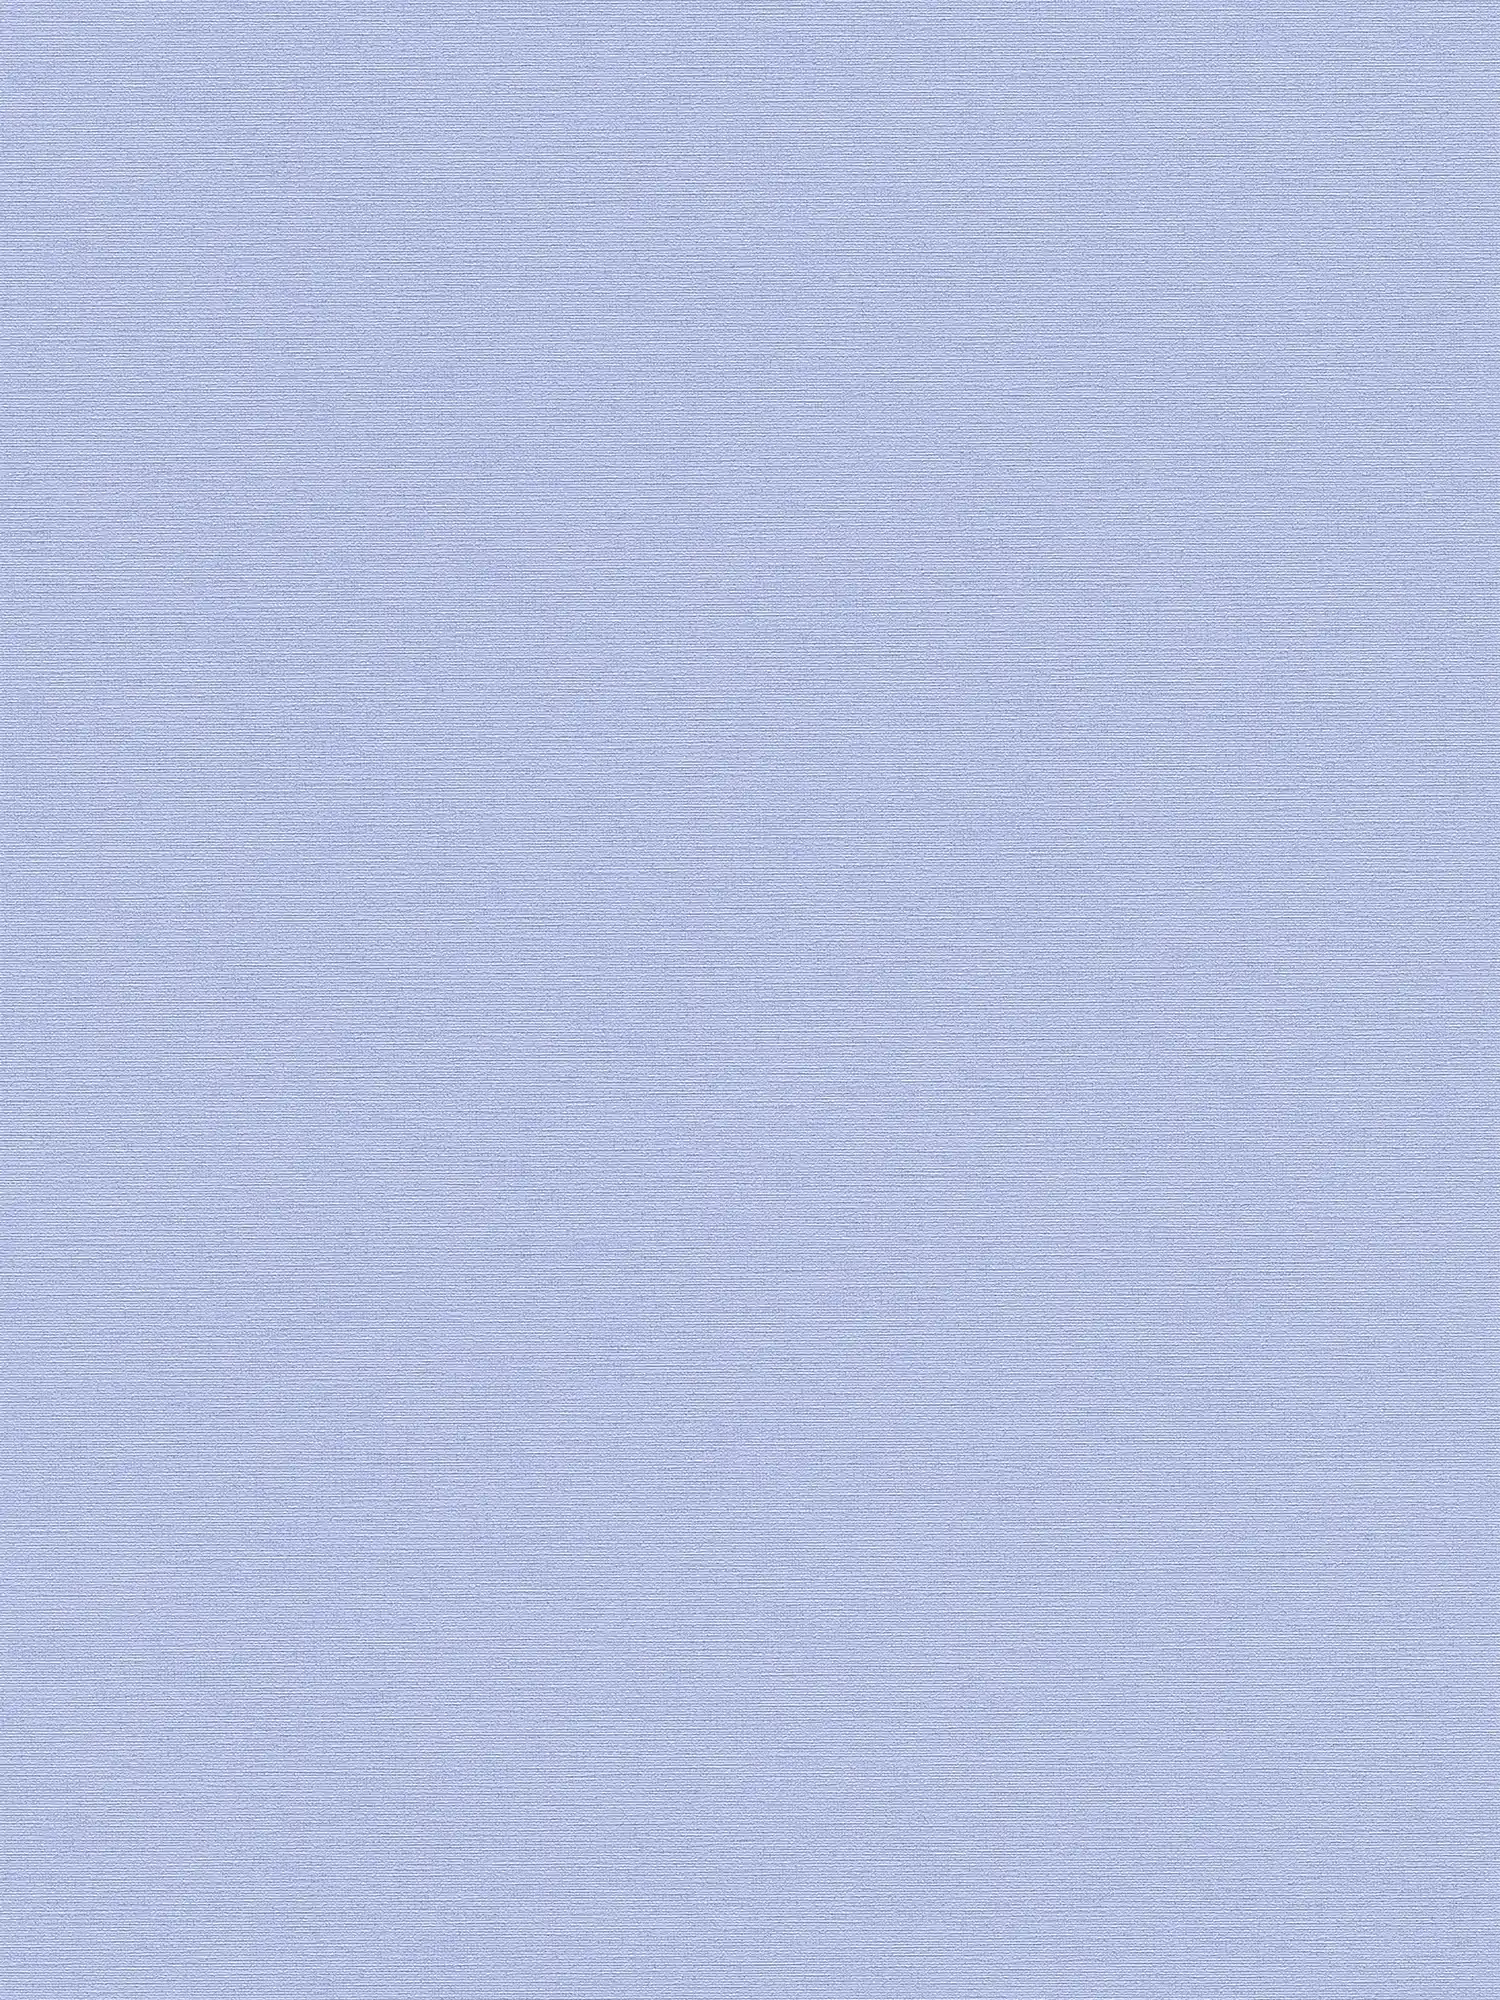 Plain non-woven wallpaper with linen look - blue
